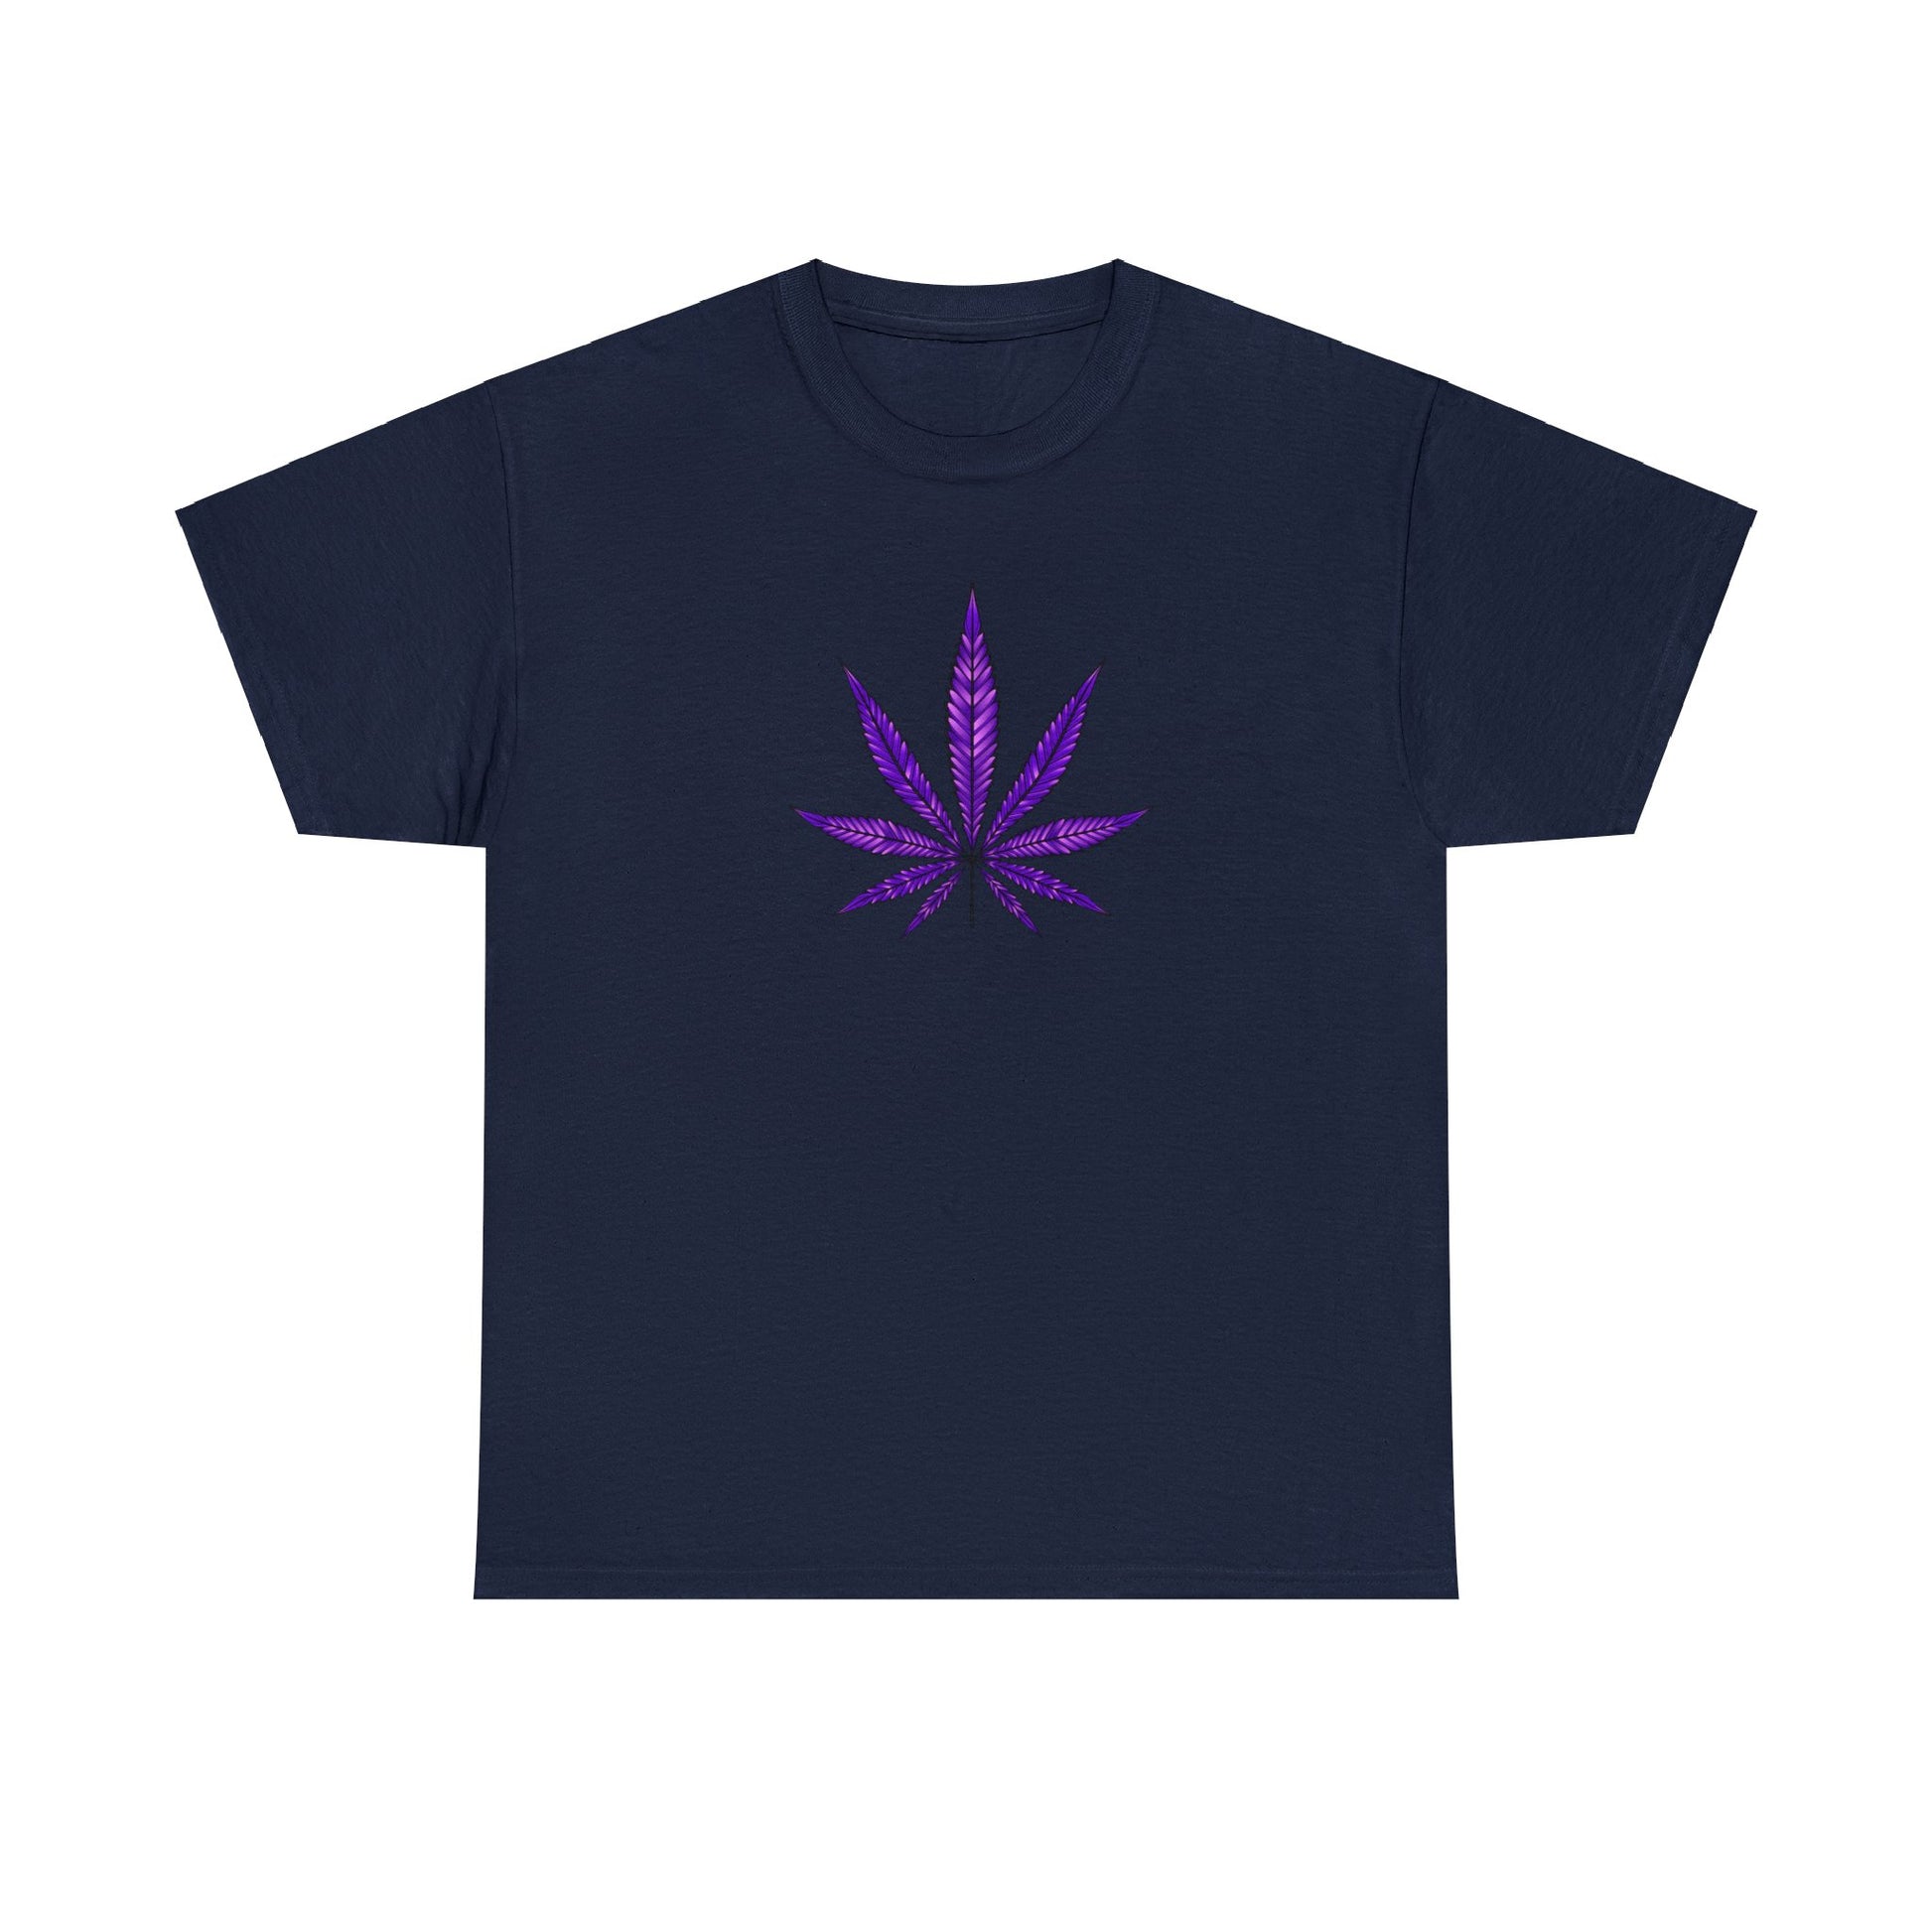 Navy blue tee with a vibrant Purple Cannabis Leaf Tee design, celebrating marijuana culture.